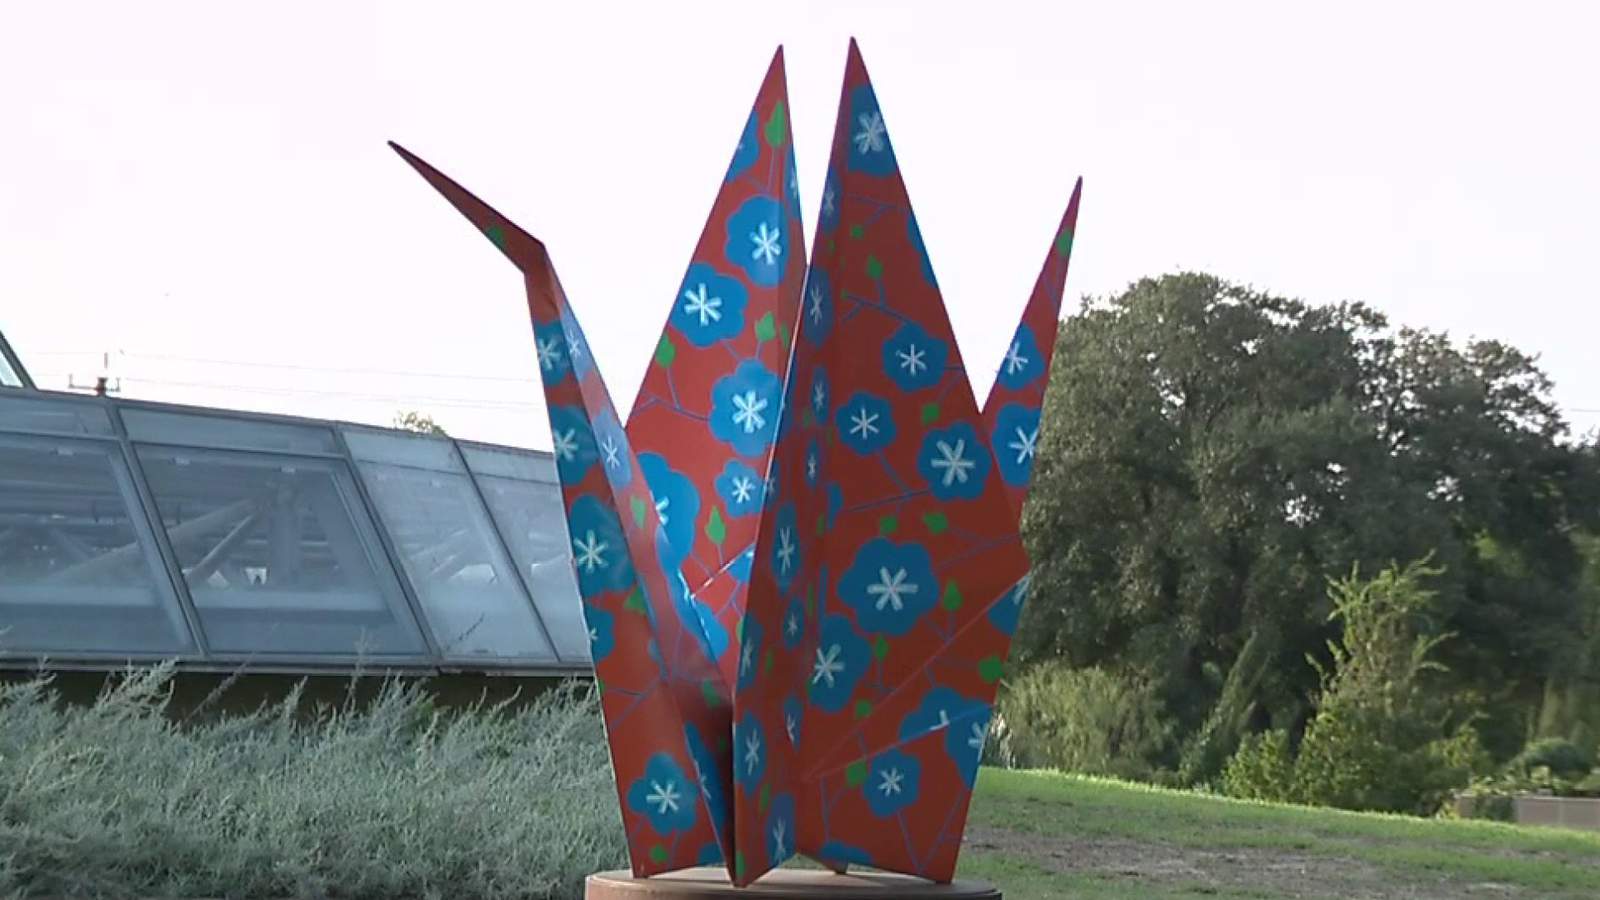 Larger than life sculptures debut at San Antonio Botanical Garden